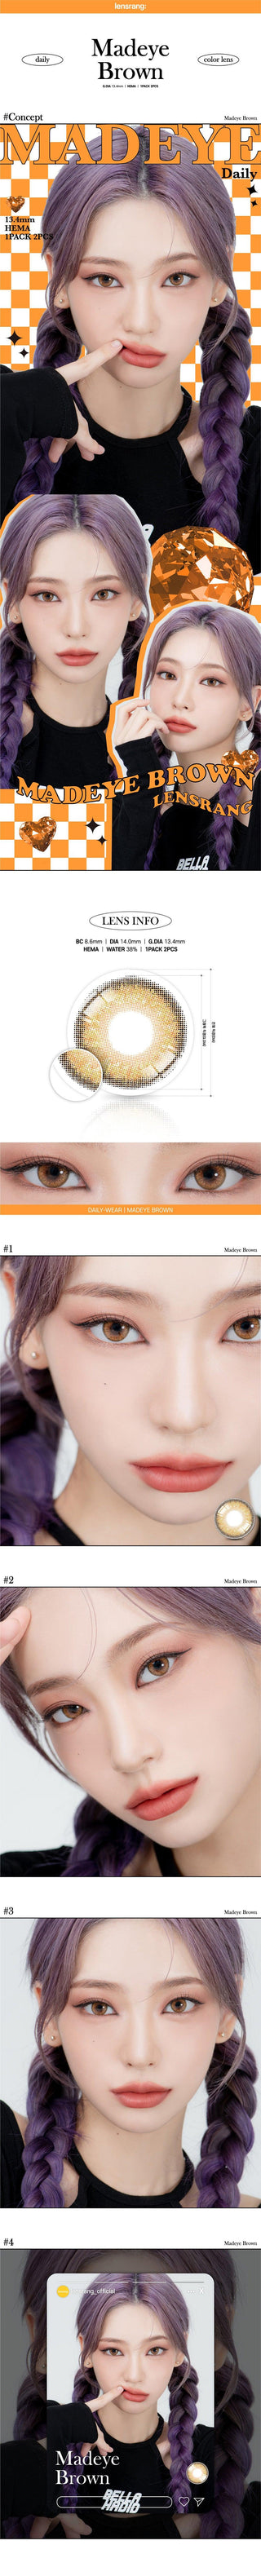 Lensrang Madeye Brown Color Contact Lens - EyeCandys